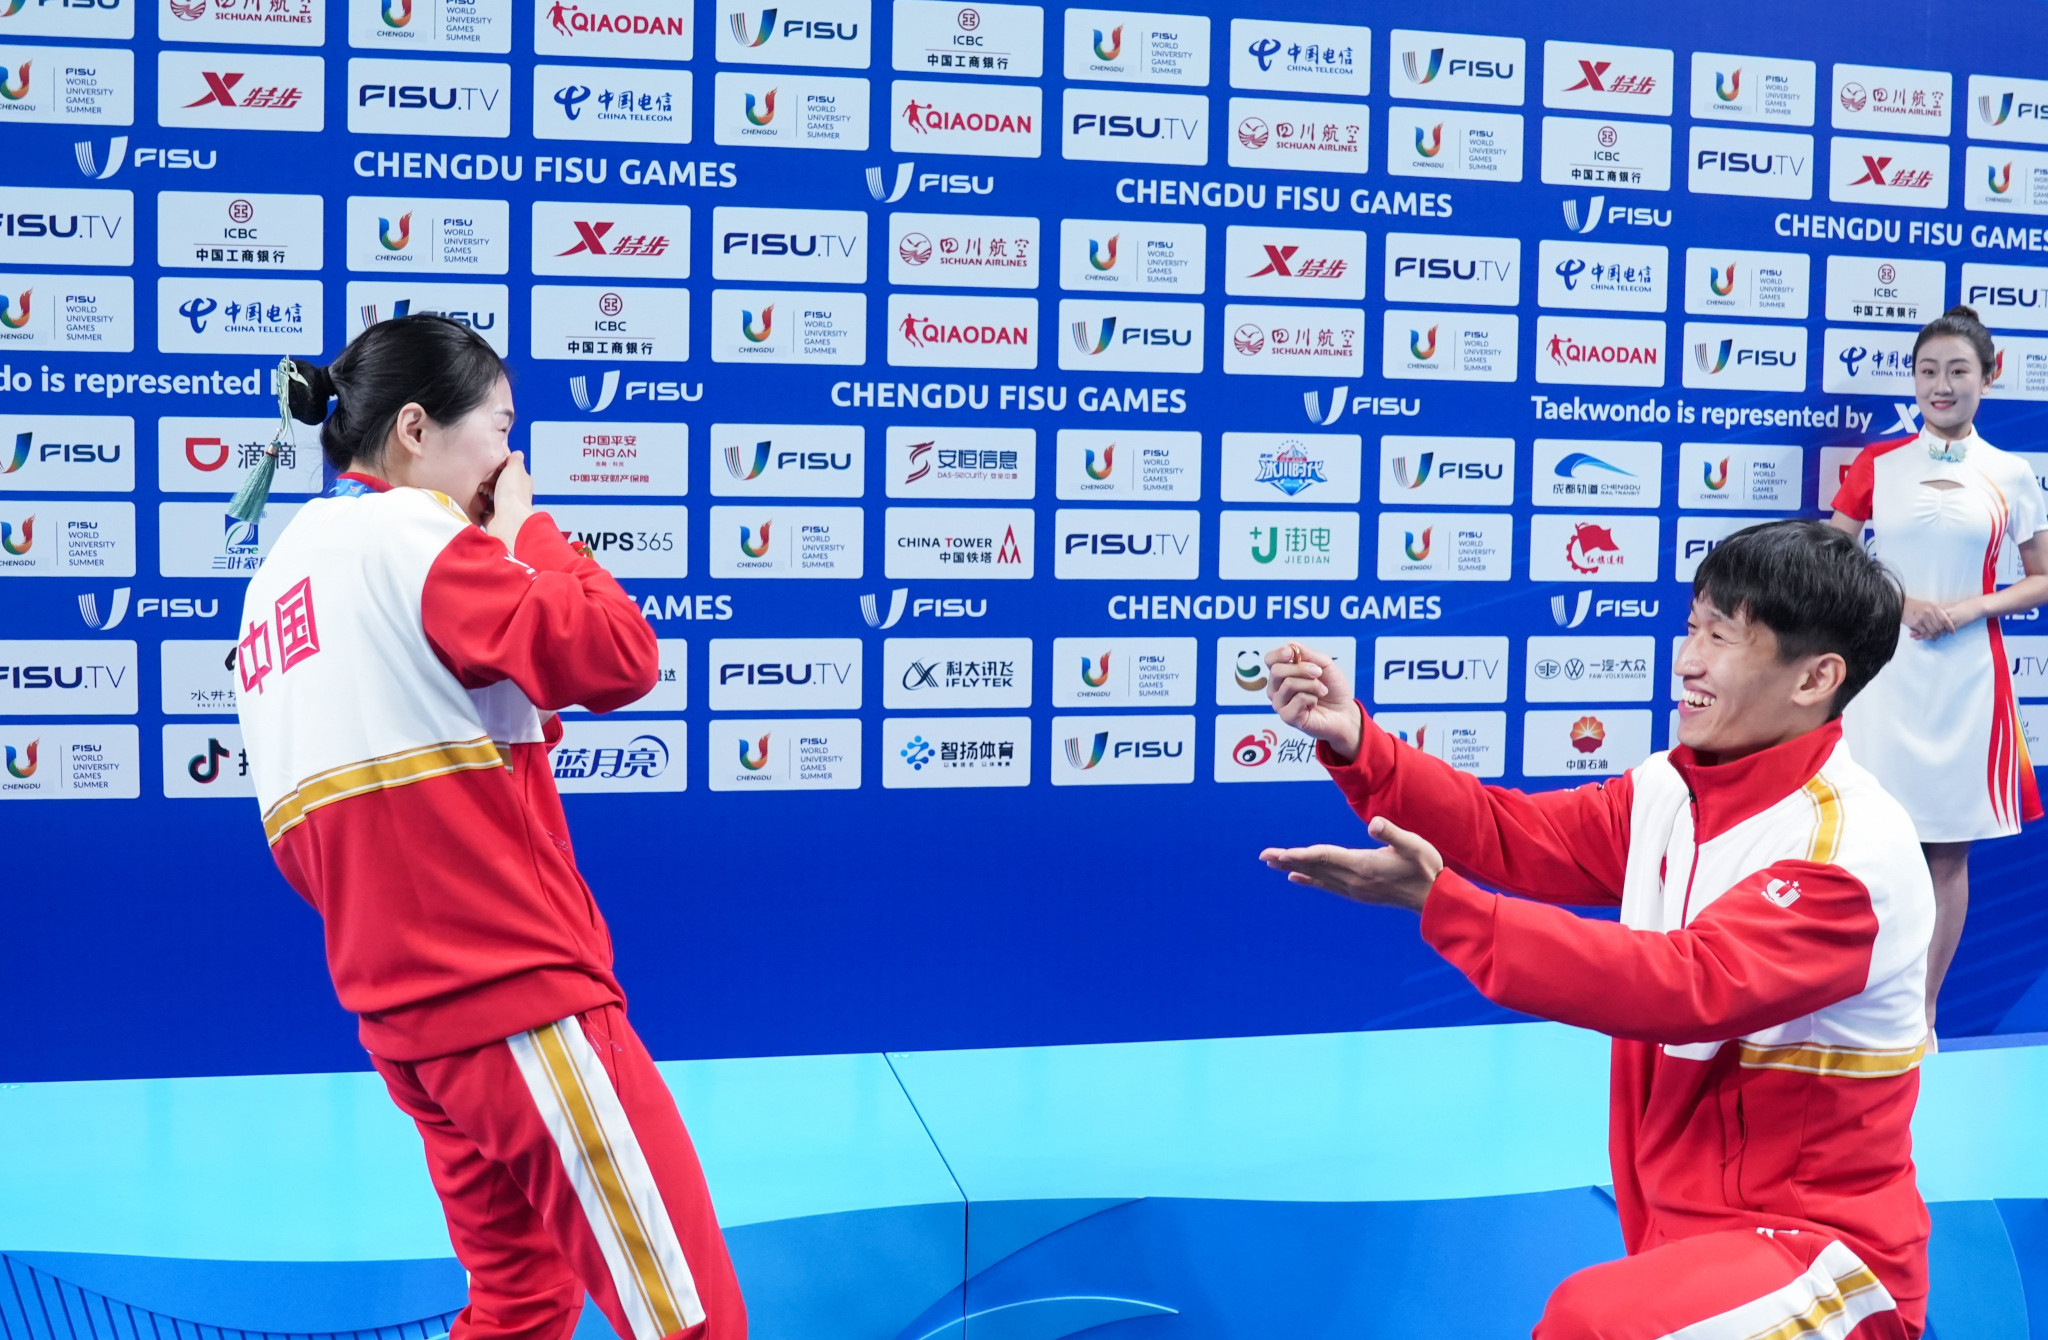 Liang accepts marriage proposal after winning taekwondo gold at Chengdu 2021